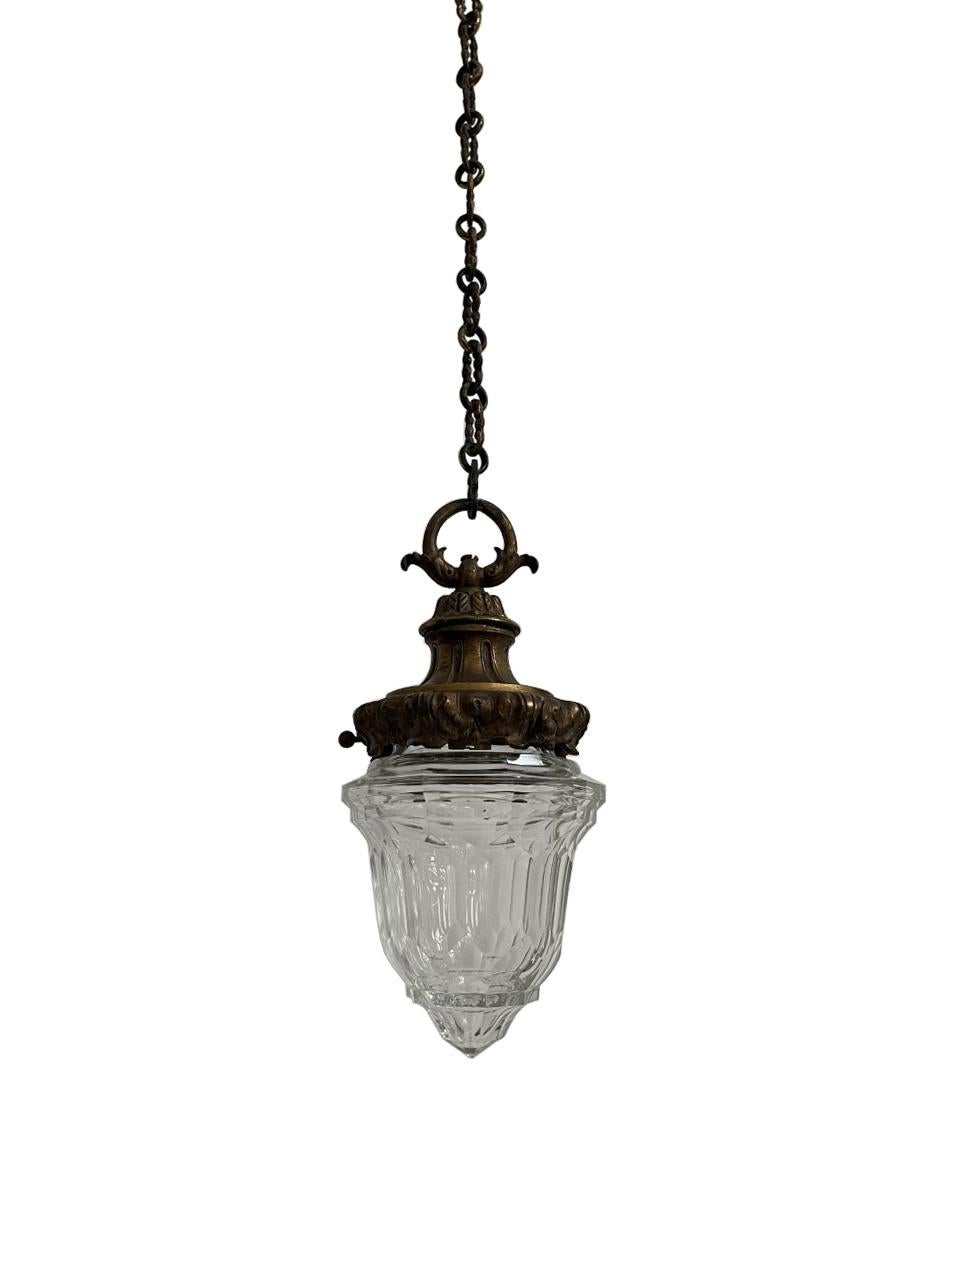 British Pair Antique Edwardian Vintage Ornate Brass Cut Glass Ceiling Pendant Light Lamp For Sale